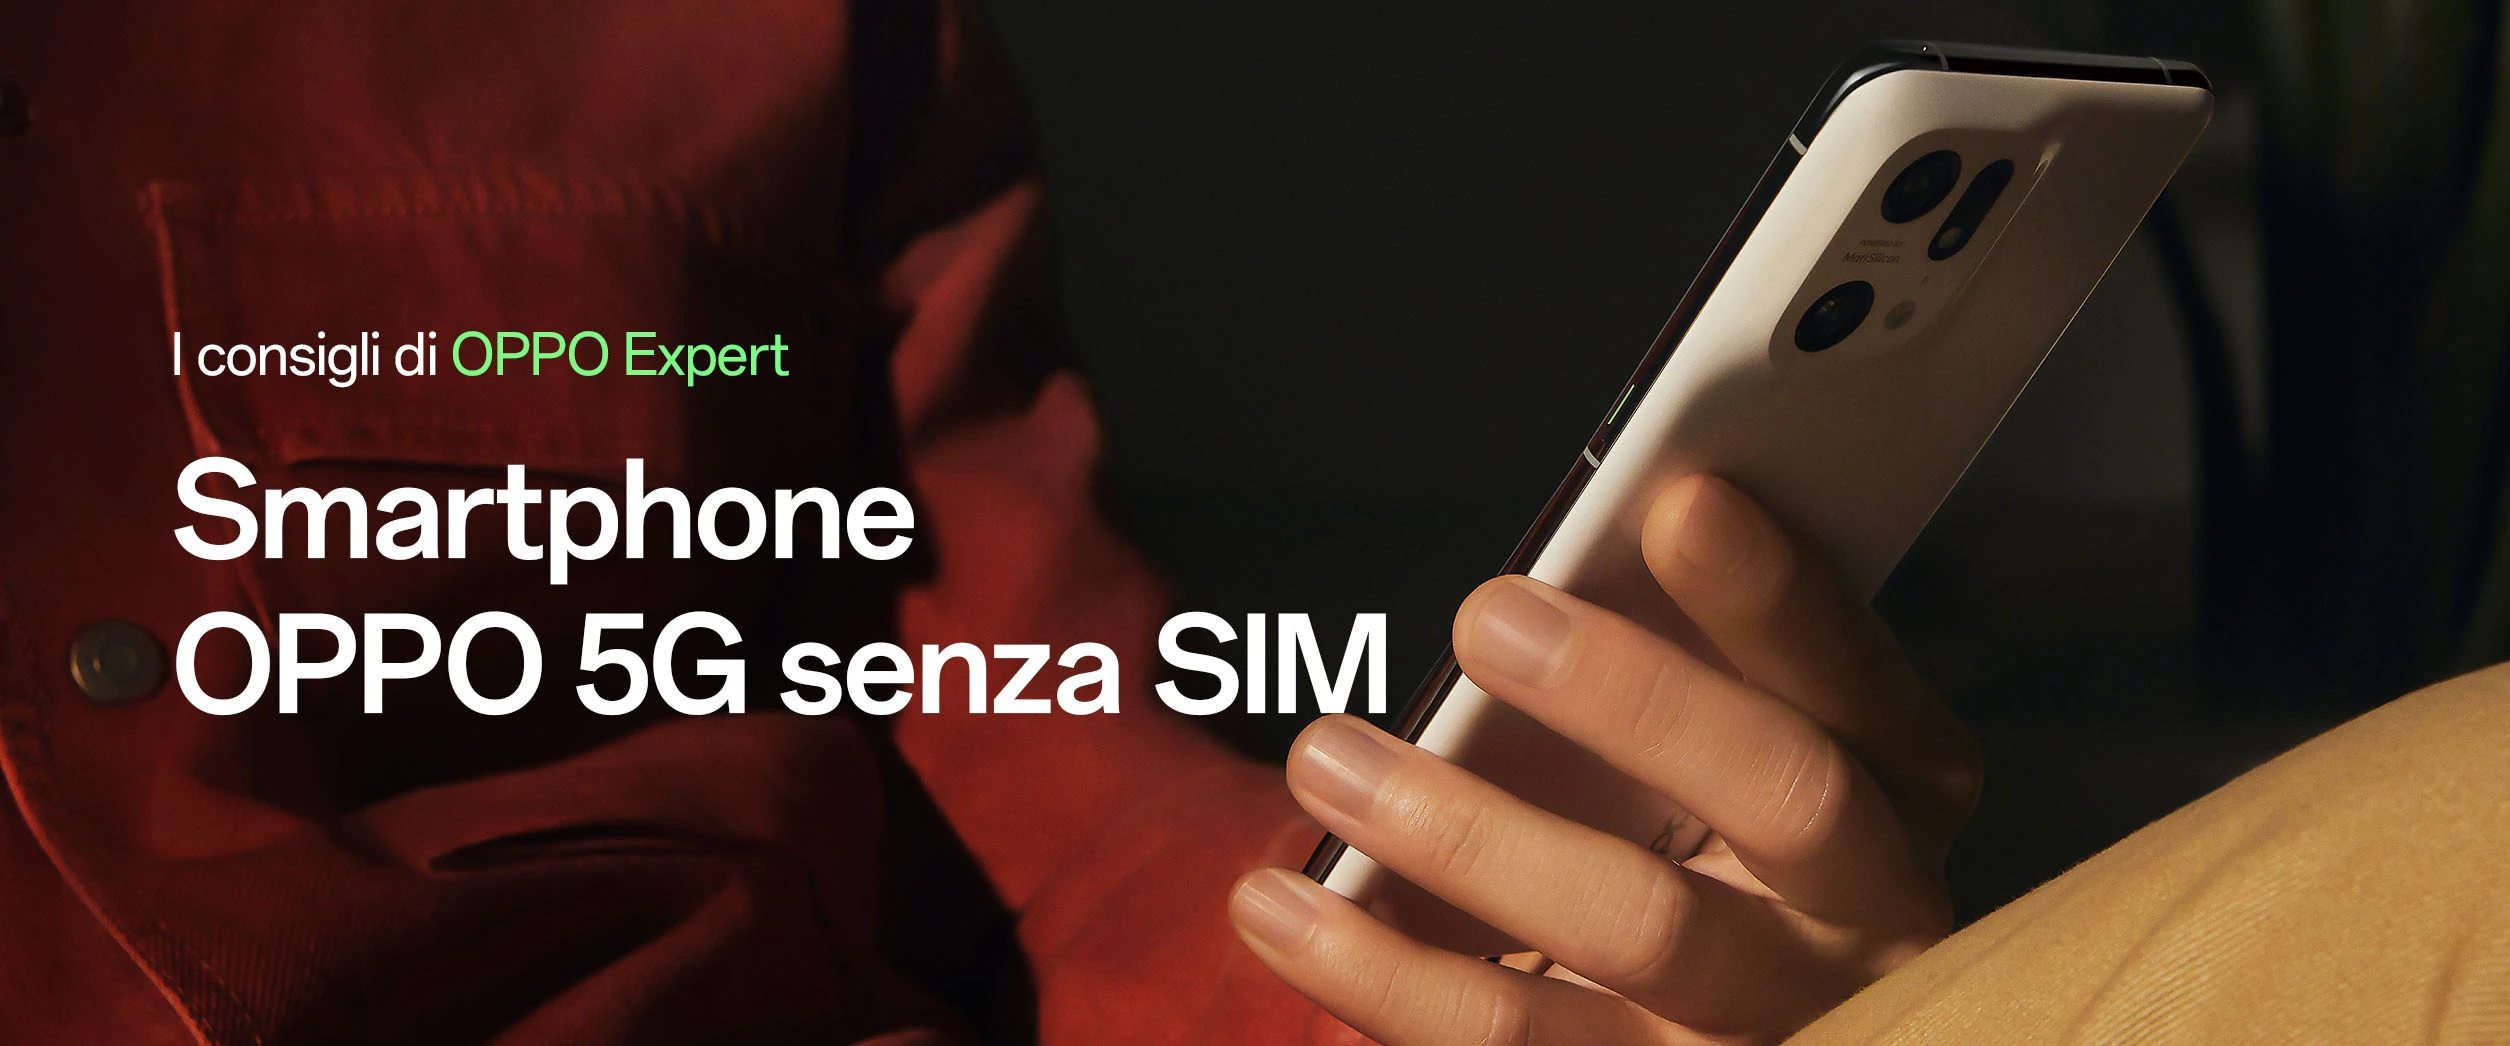 23. Smartphone OPPO 5G senza SIM .jpg